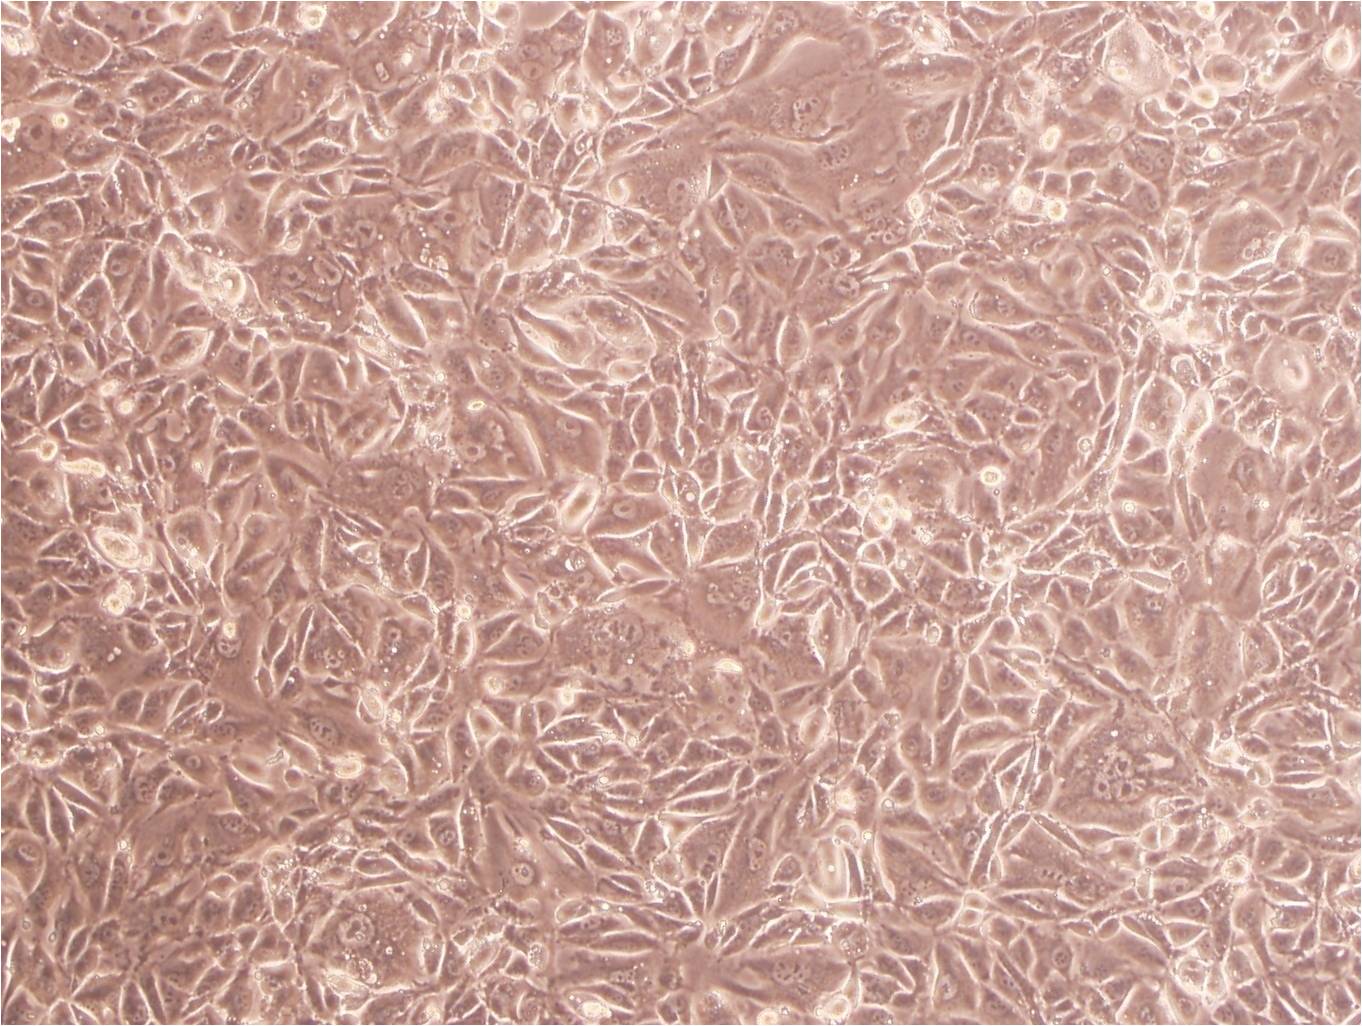 MC3T3-E1 Subclone 24 Cells(赠送Str鉴定报告)|小鼠胚胎成骨细胞,MC3T3-E1 Subclone 24 Cells